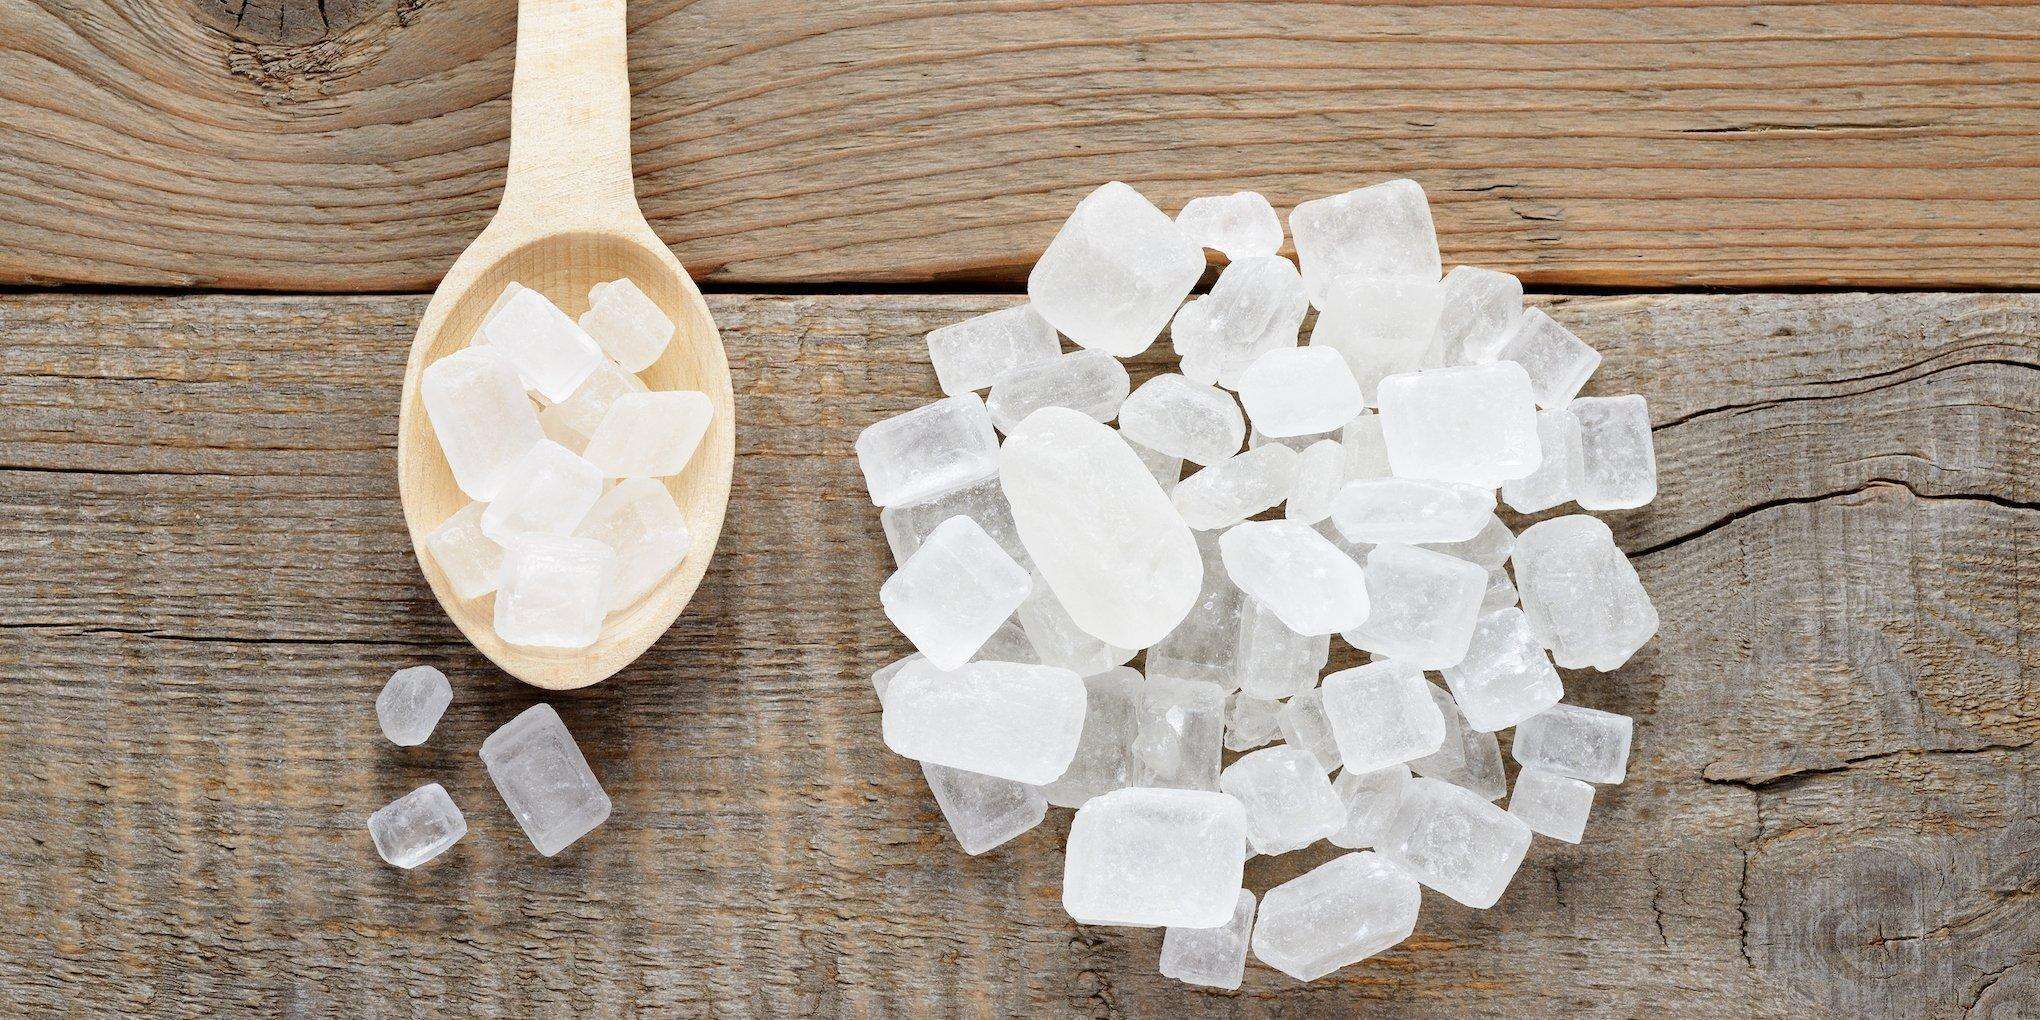 Can High Sugar Intake Cause Kidney Stones?